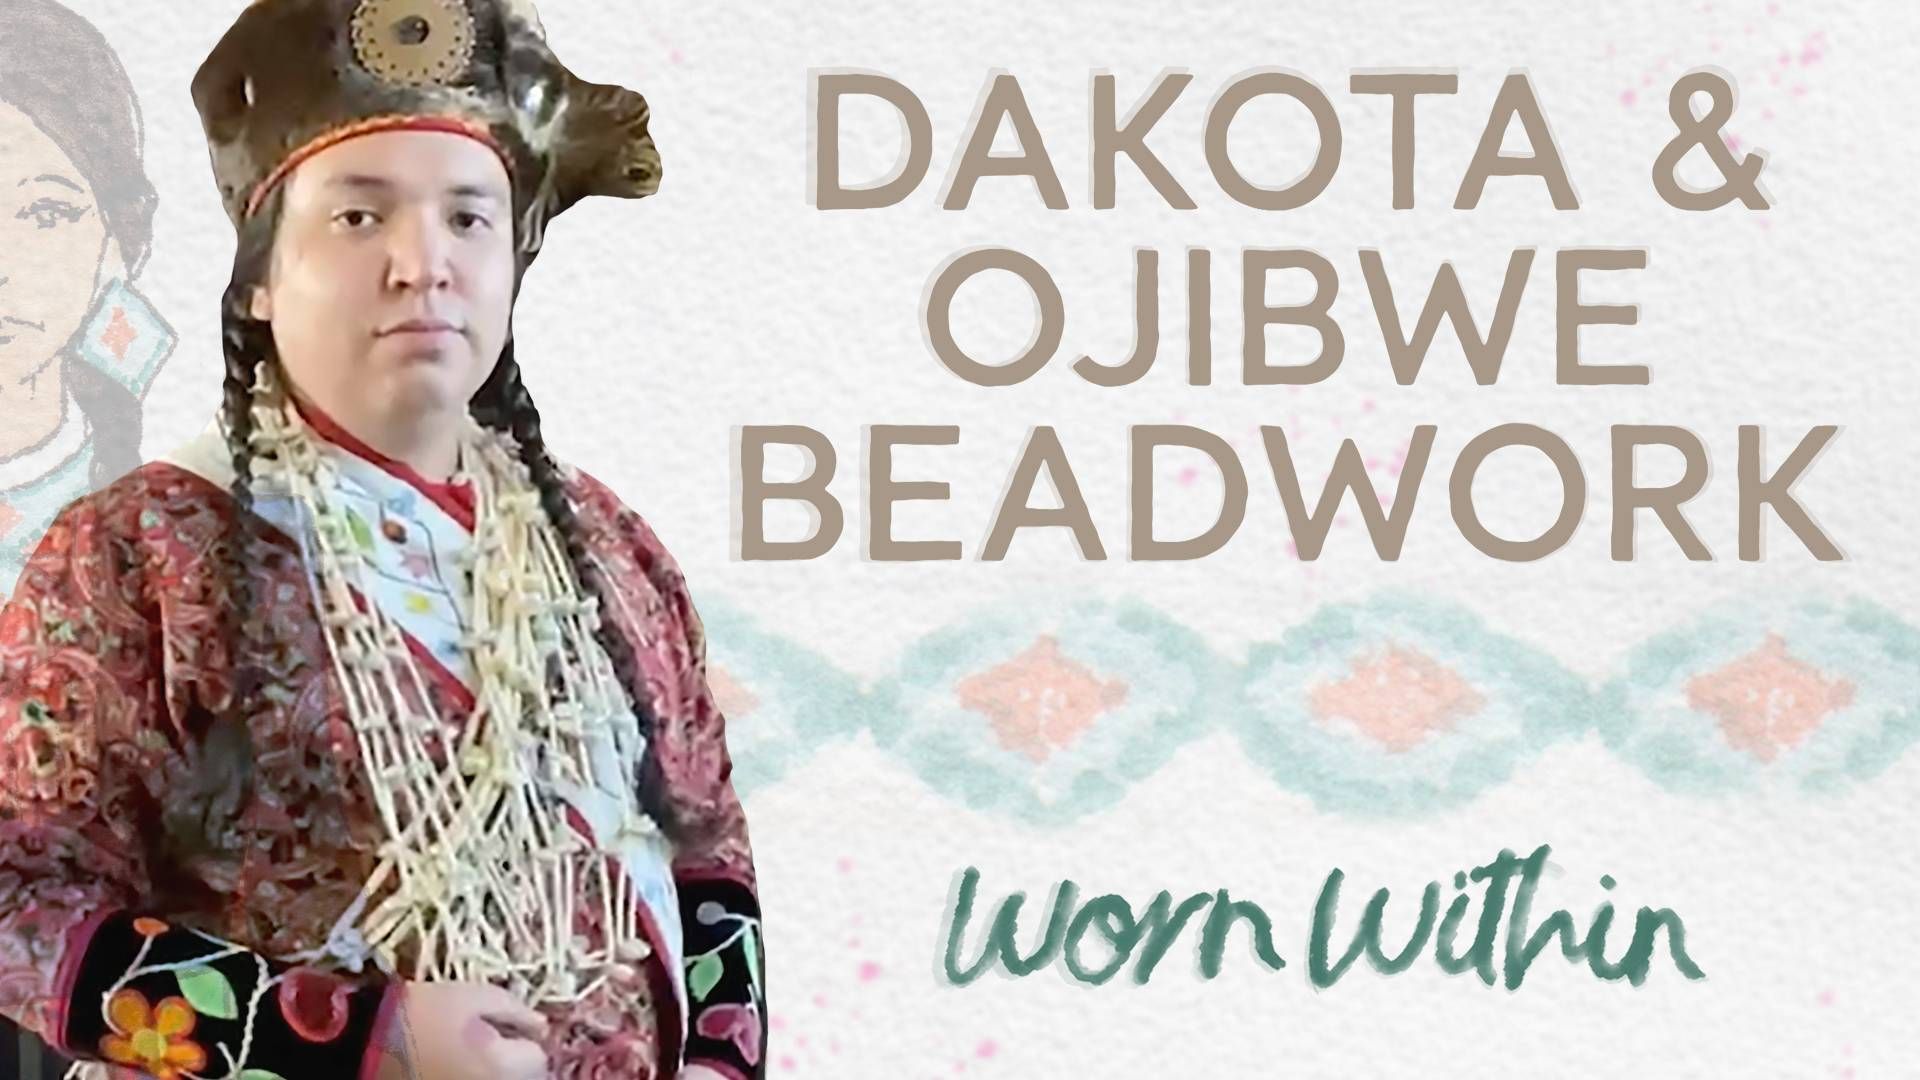 Worn Within: What is the difference between Dakota & Ojibwe beadwork?